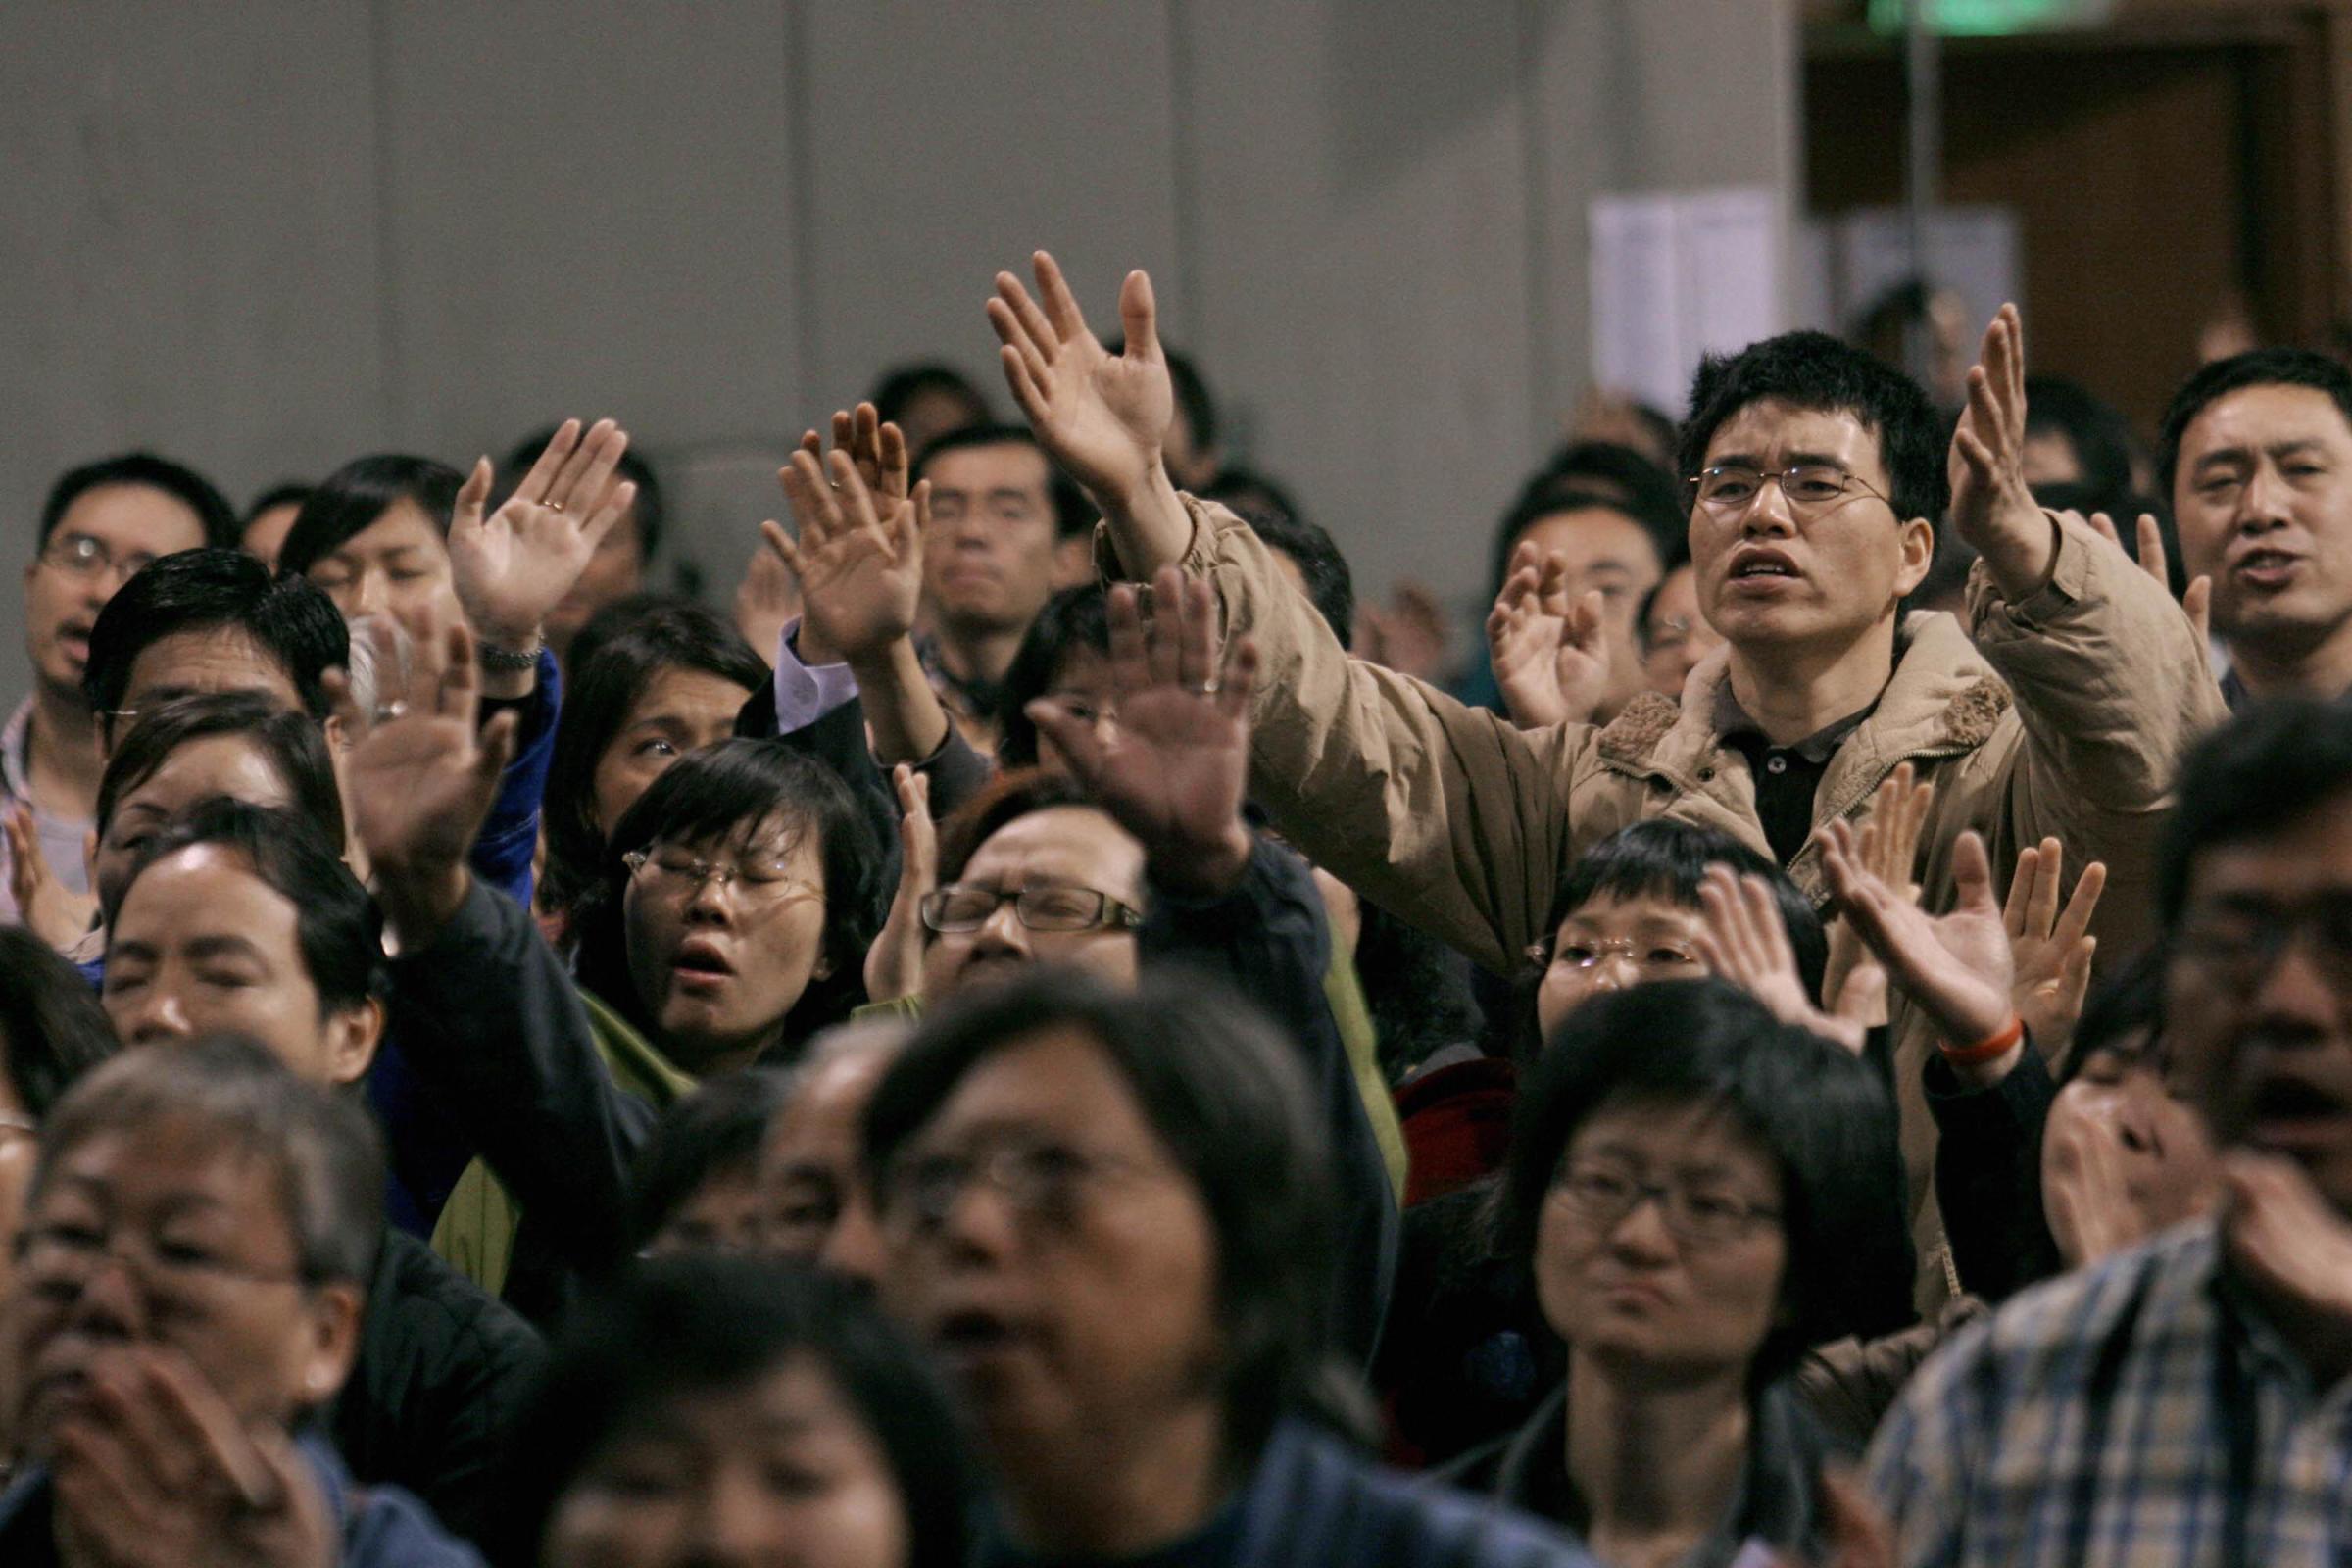 Participants raise their hands in prayer